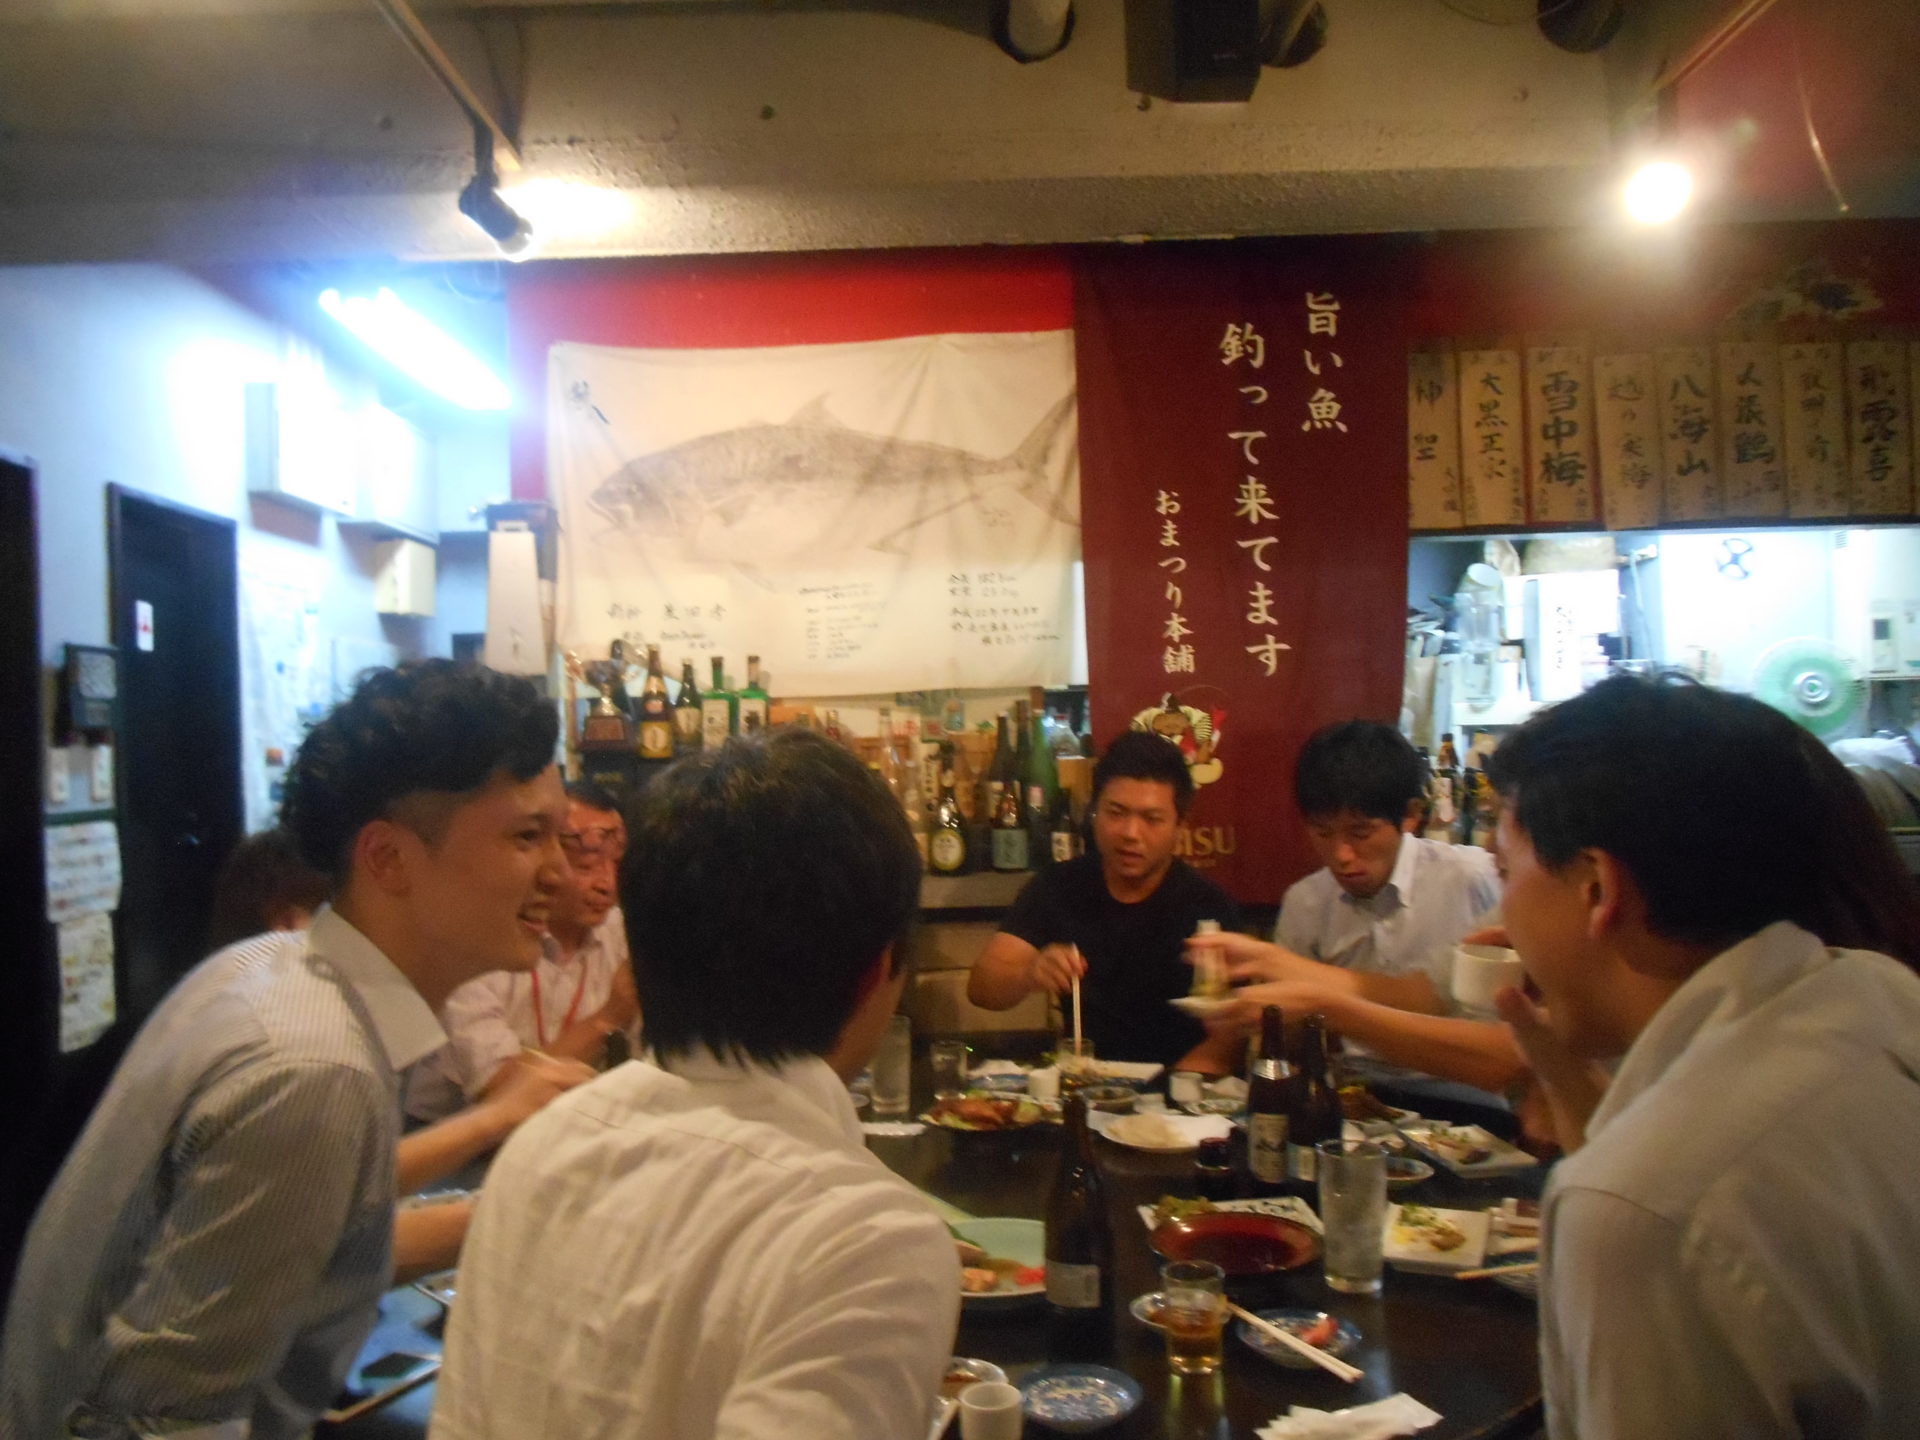 DSCN5608 1920x1440 - 2015年9月14日 AOsuki定例飲み会開催しました。